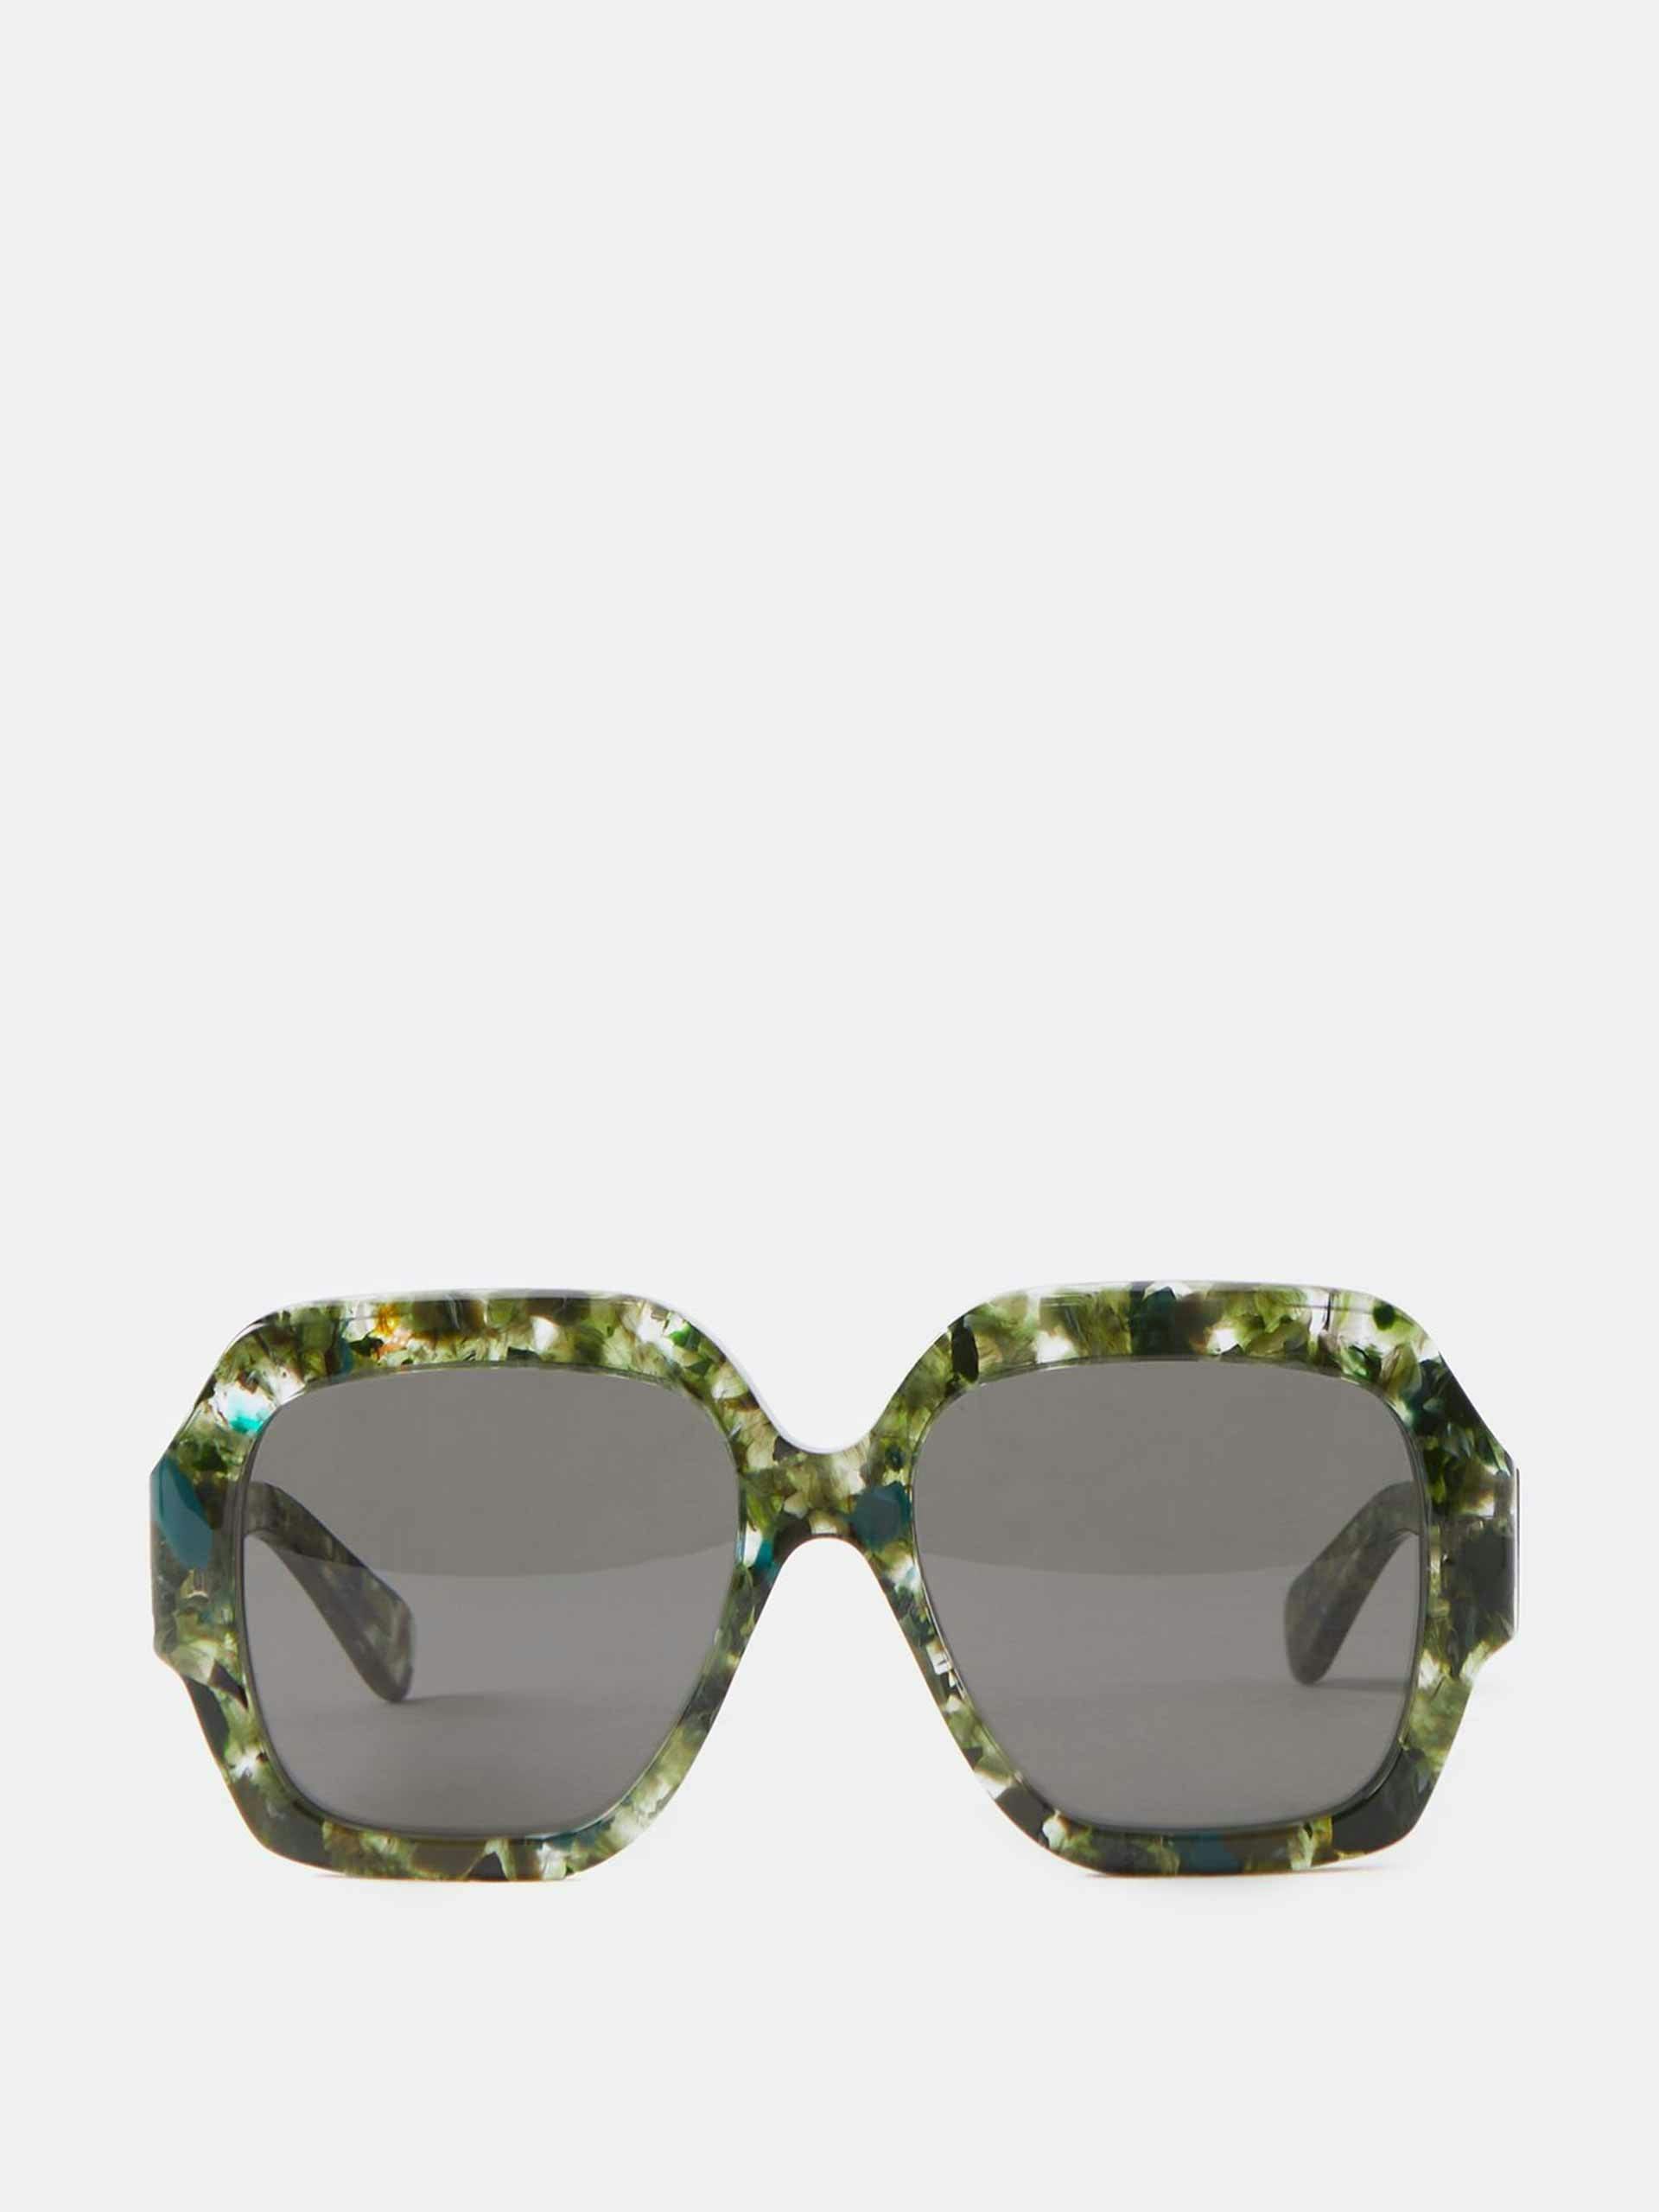 Oversized marbled sunglasses